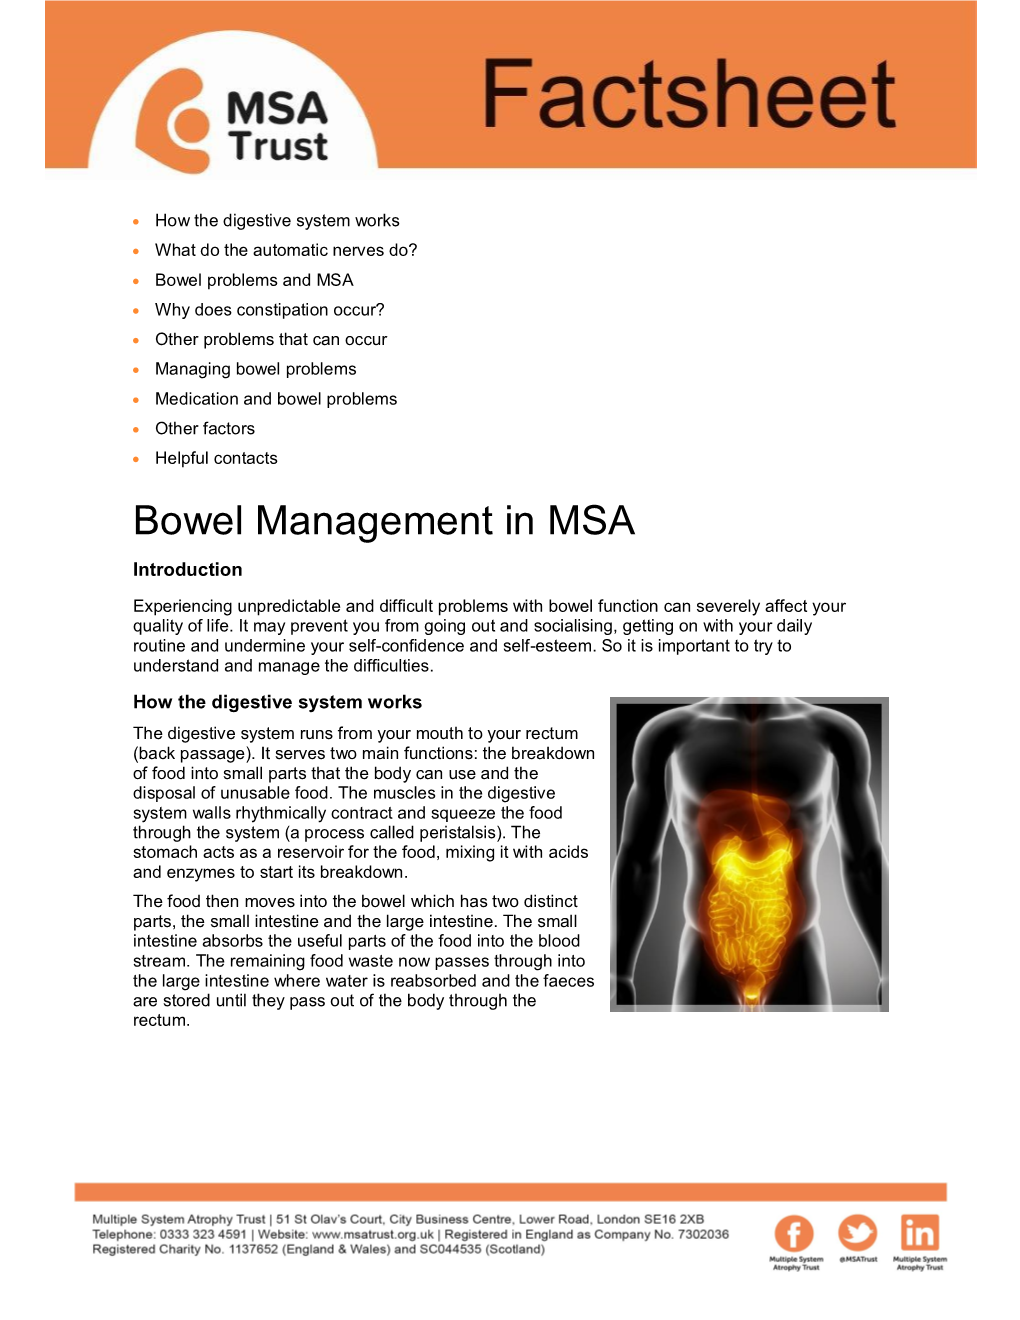 Bowel Management in MSA Introduction